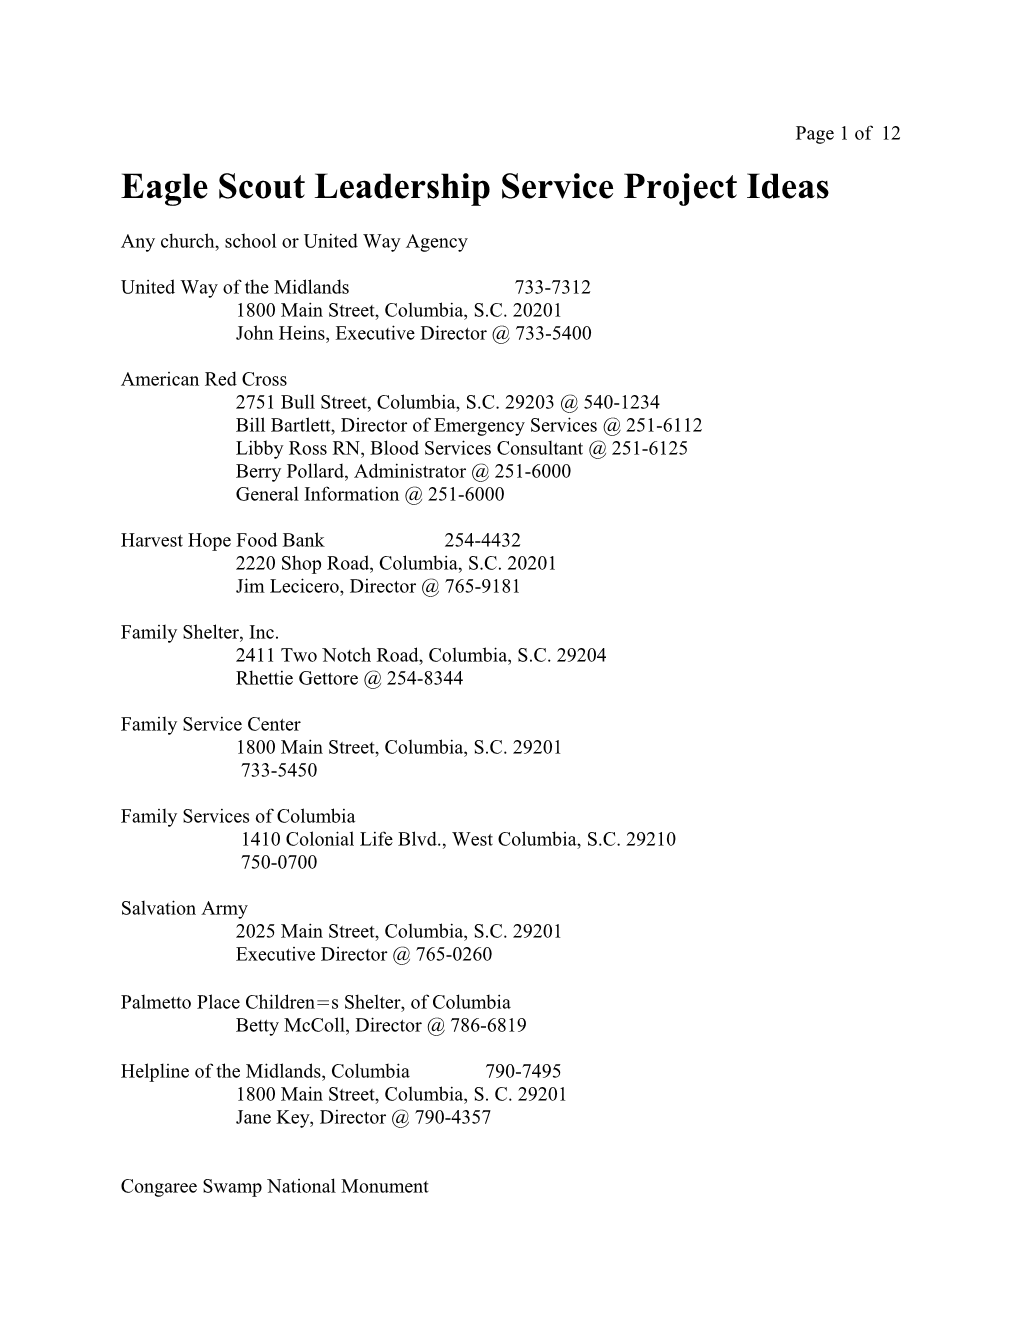 Eagle Scout Leadership Service Project Ideas